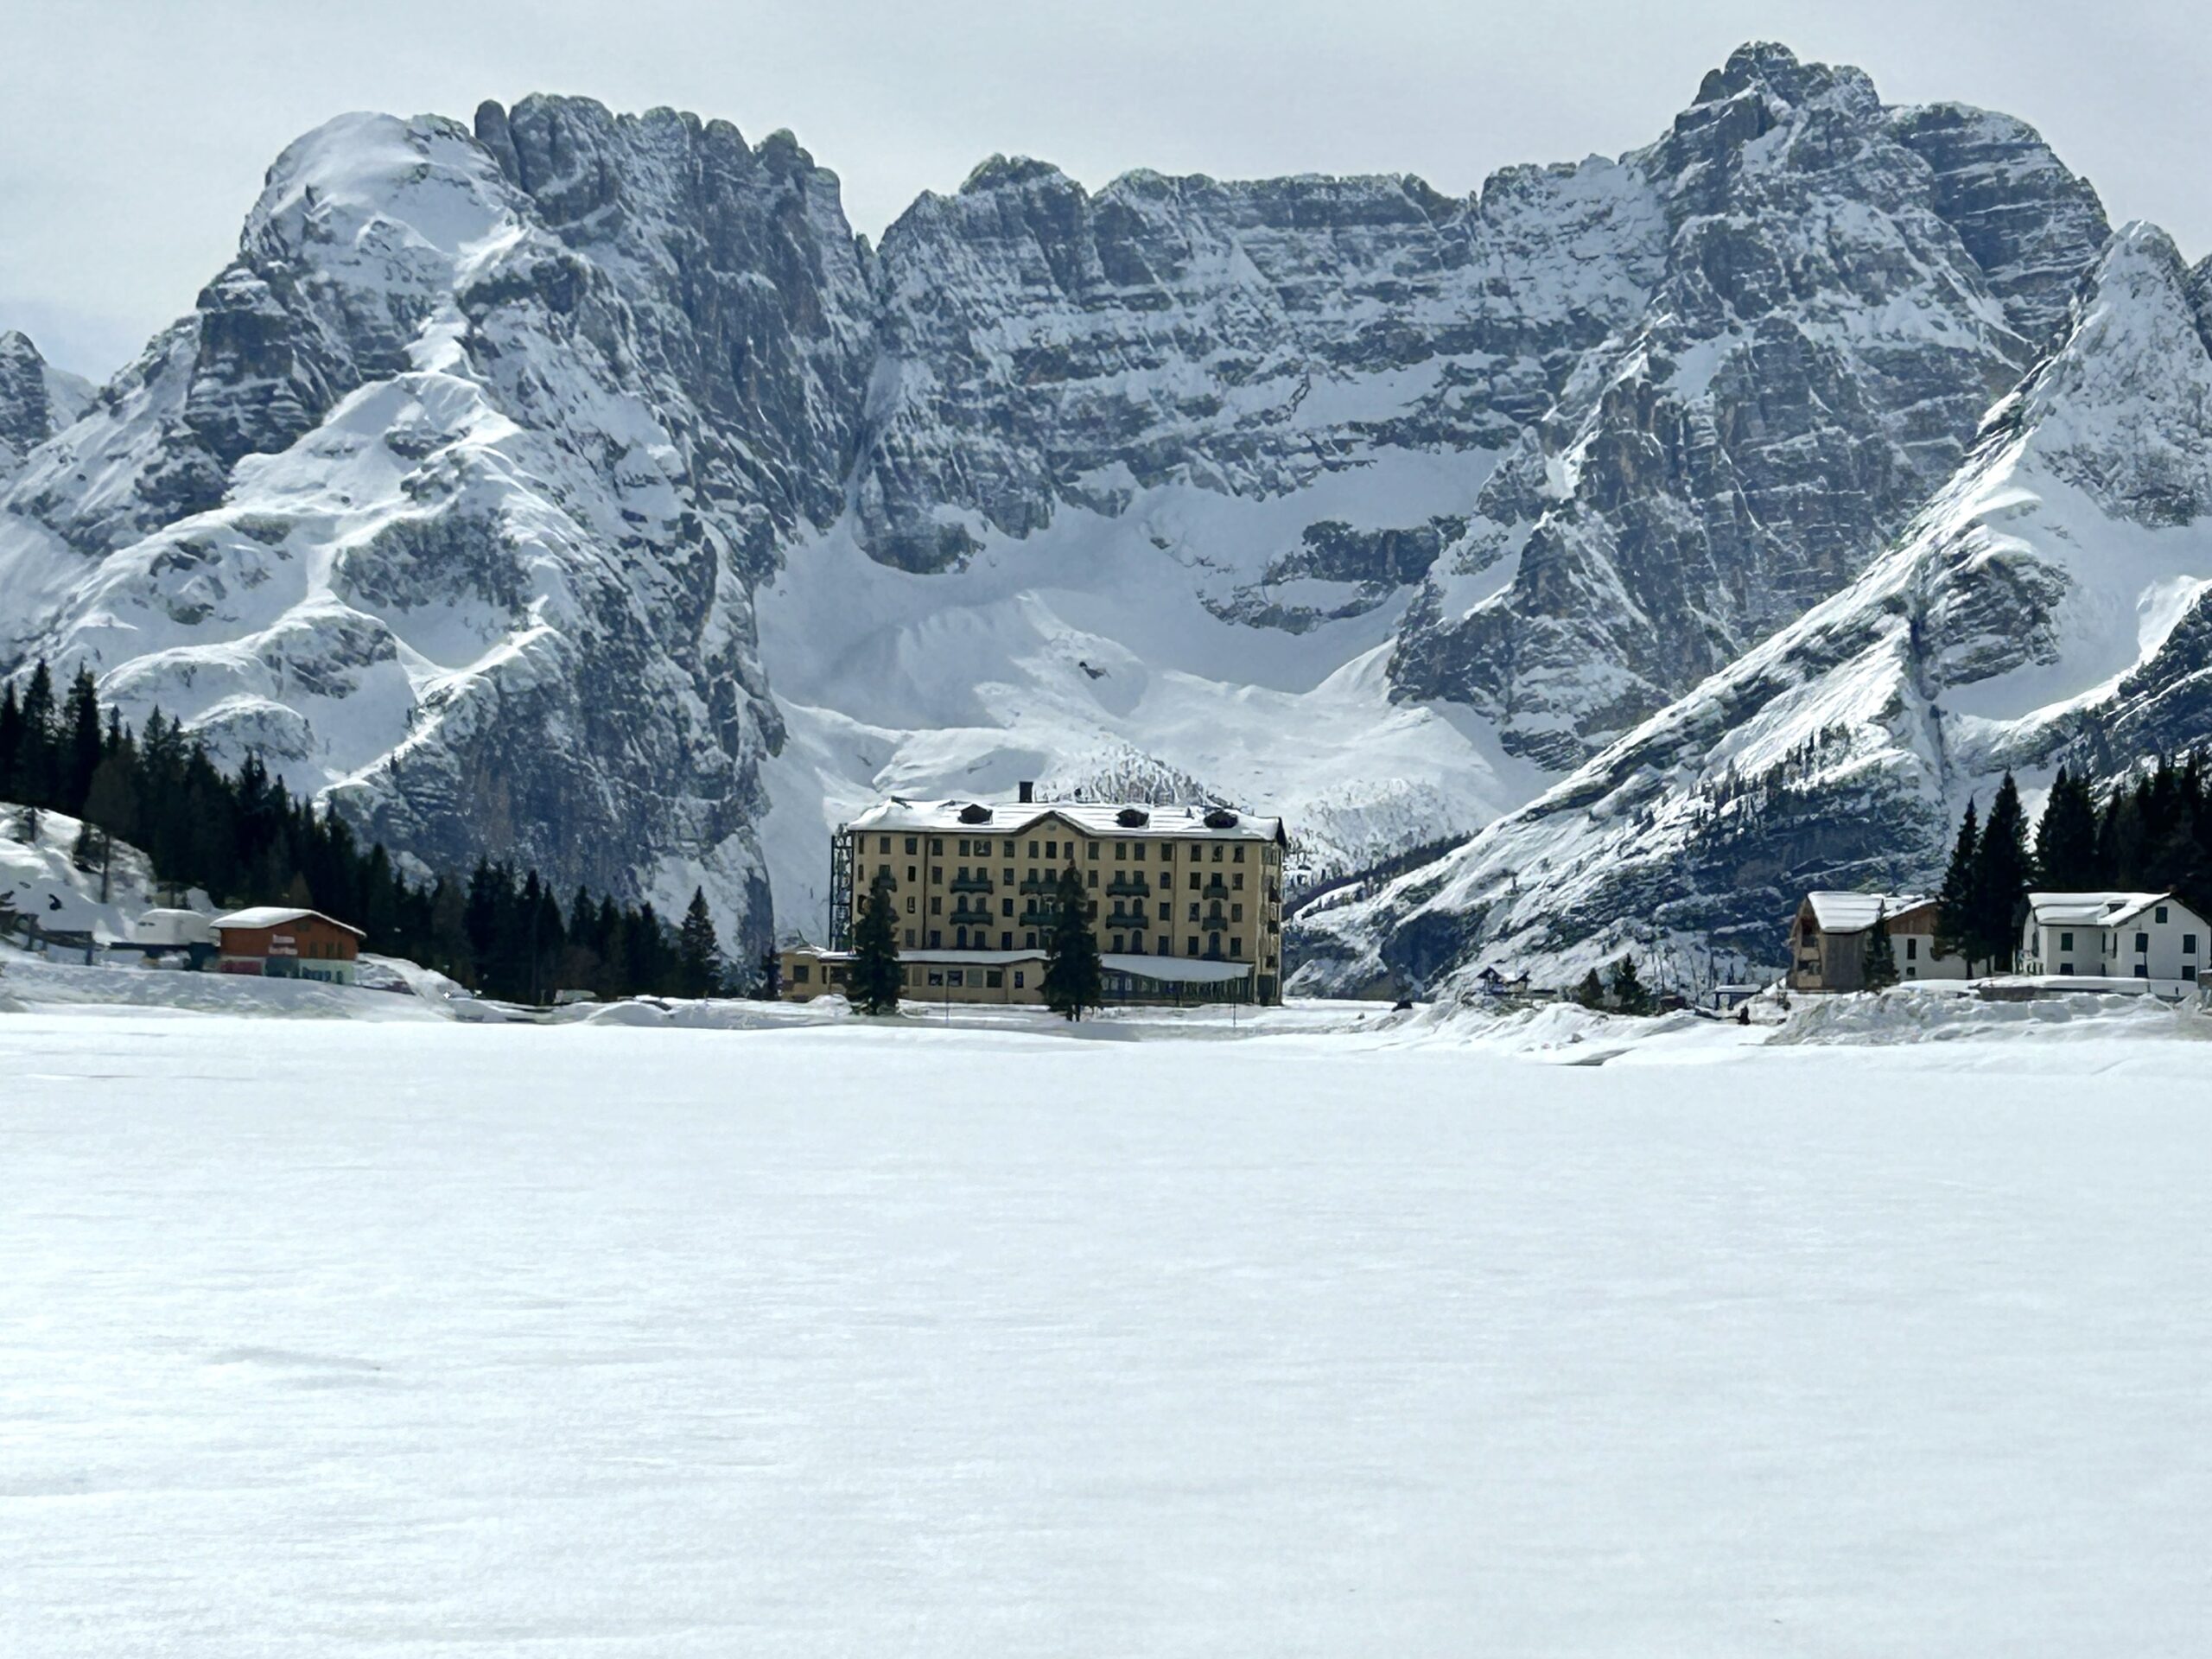 Misurina Lake, Dolomites in winter, Italy